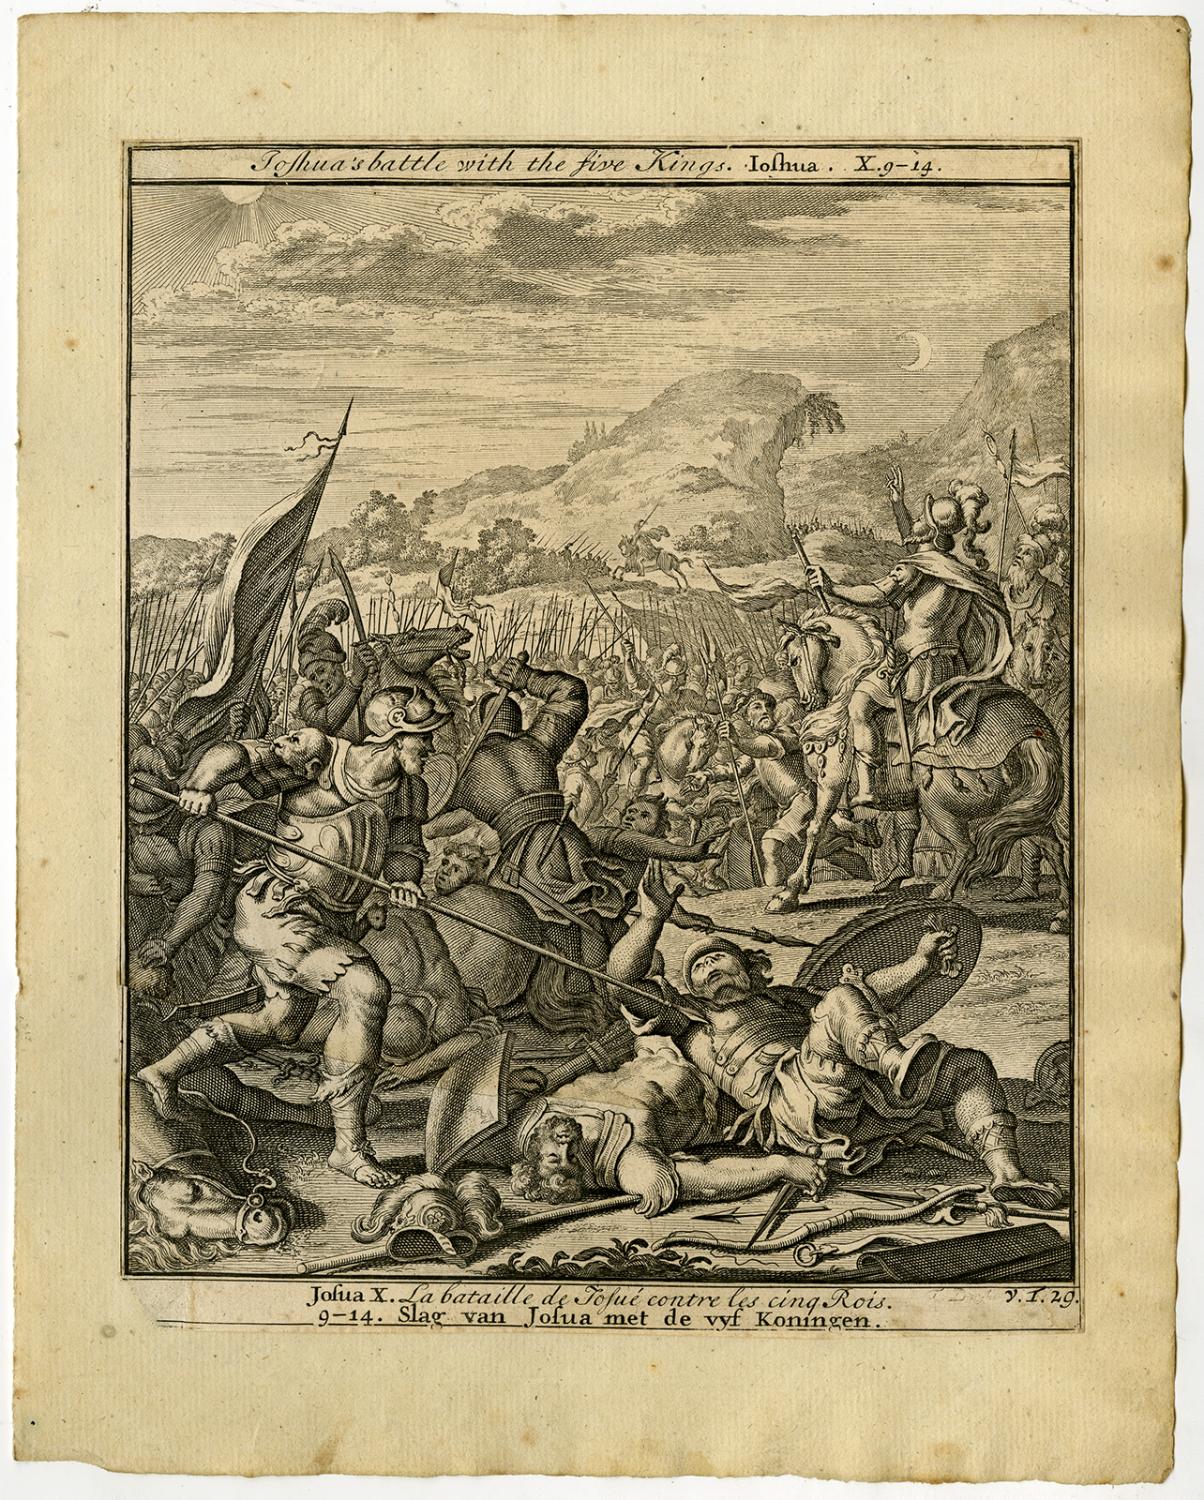 Antique Print-JOSHUA-BATTLE-FIVE KINGS-AMORITES-V.T. 29-Scheits-1754:  Art / Print / Poster